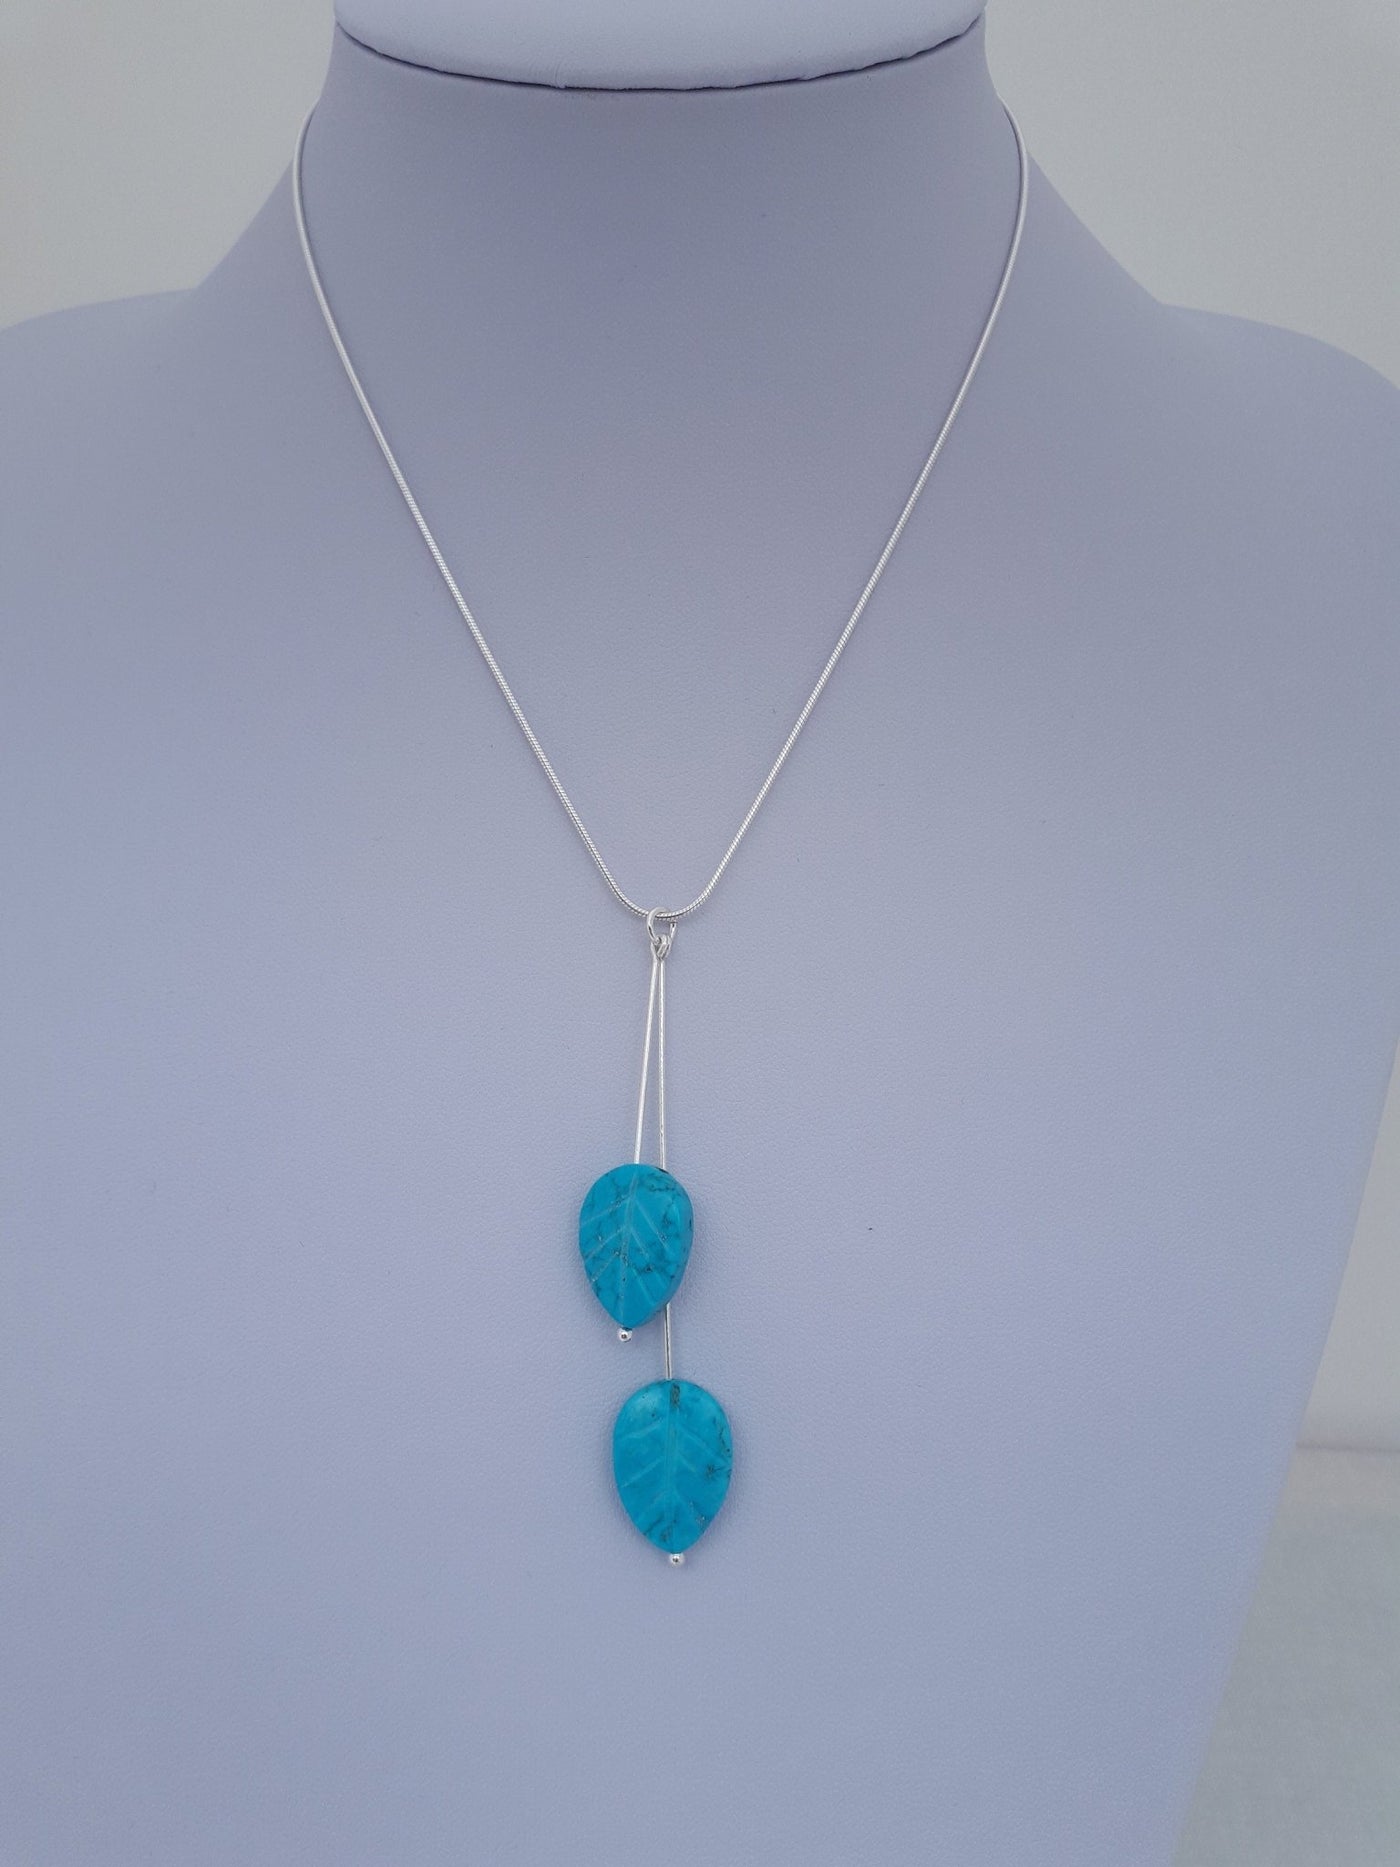 925 Sterling Silver Blue Magnesite Carved Leaf Necklace. - JOANNE MASSEY ARTISAN JEWELLERY